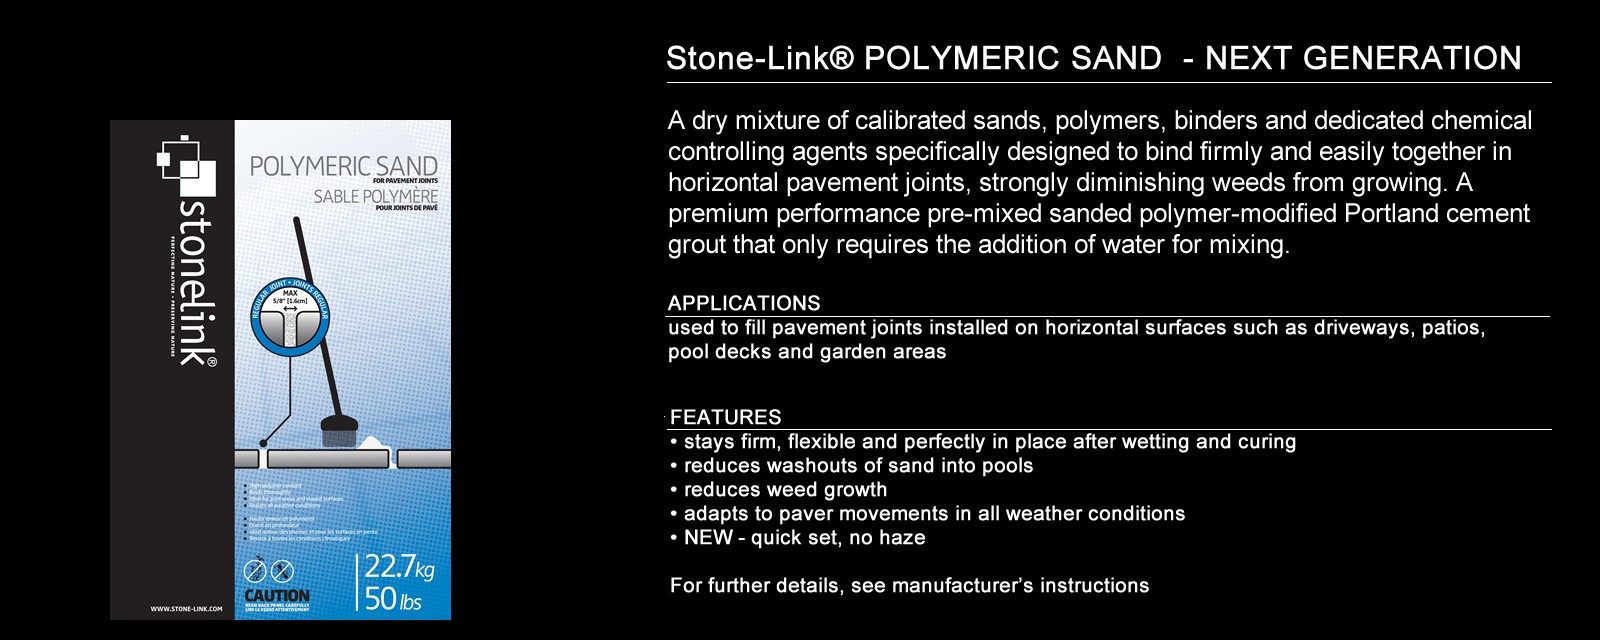 Stone-Link® Polymeric Sand